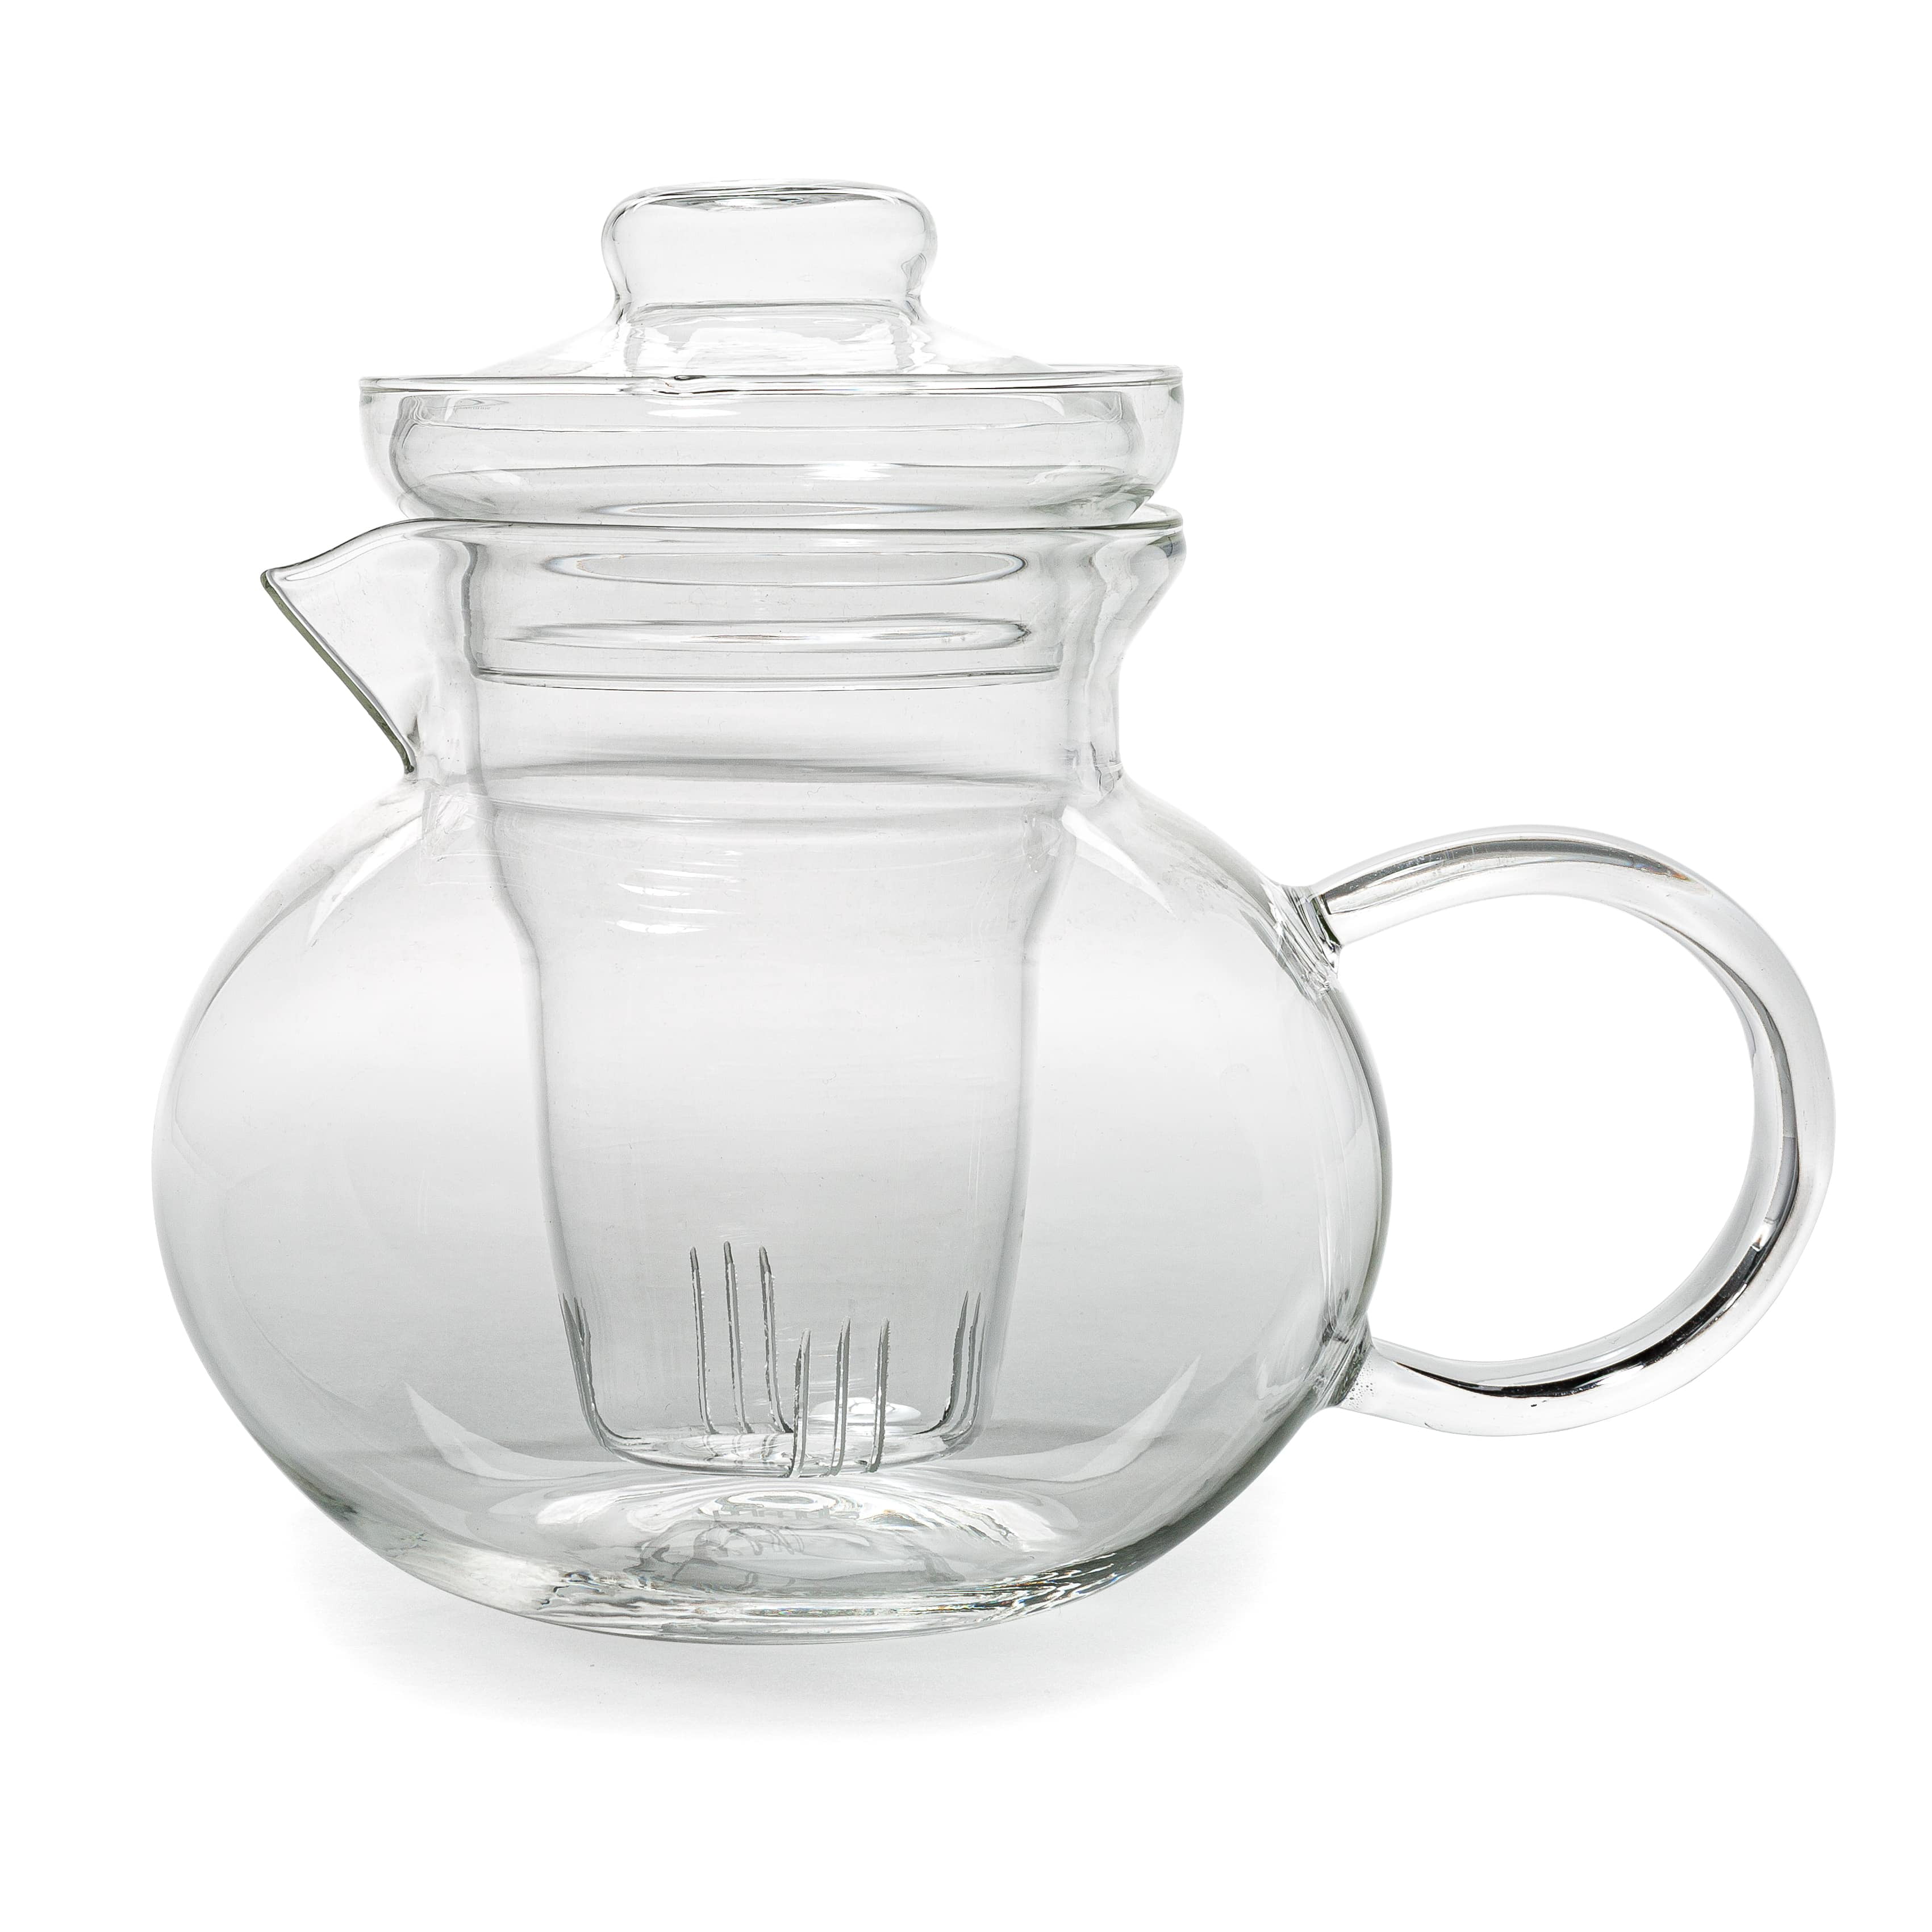 920ml(31oz) Pumpkin Glass teapot .DAFGAAKLKG Safe medium teapot.Sassy  teapot with attitude.The Office teapot.For Flower Tea and Loose Leaf Tea  Maker Set: Teapots